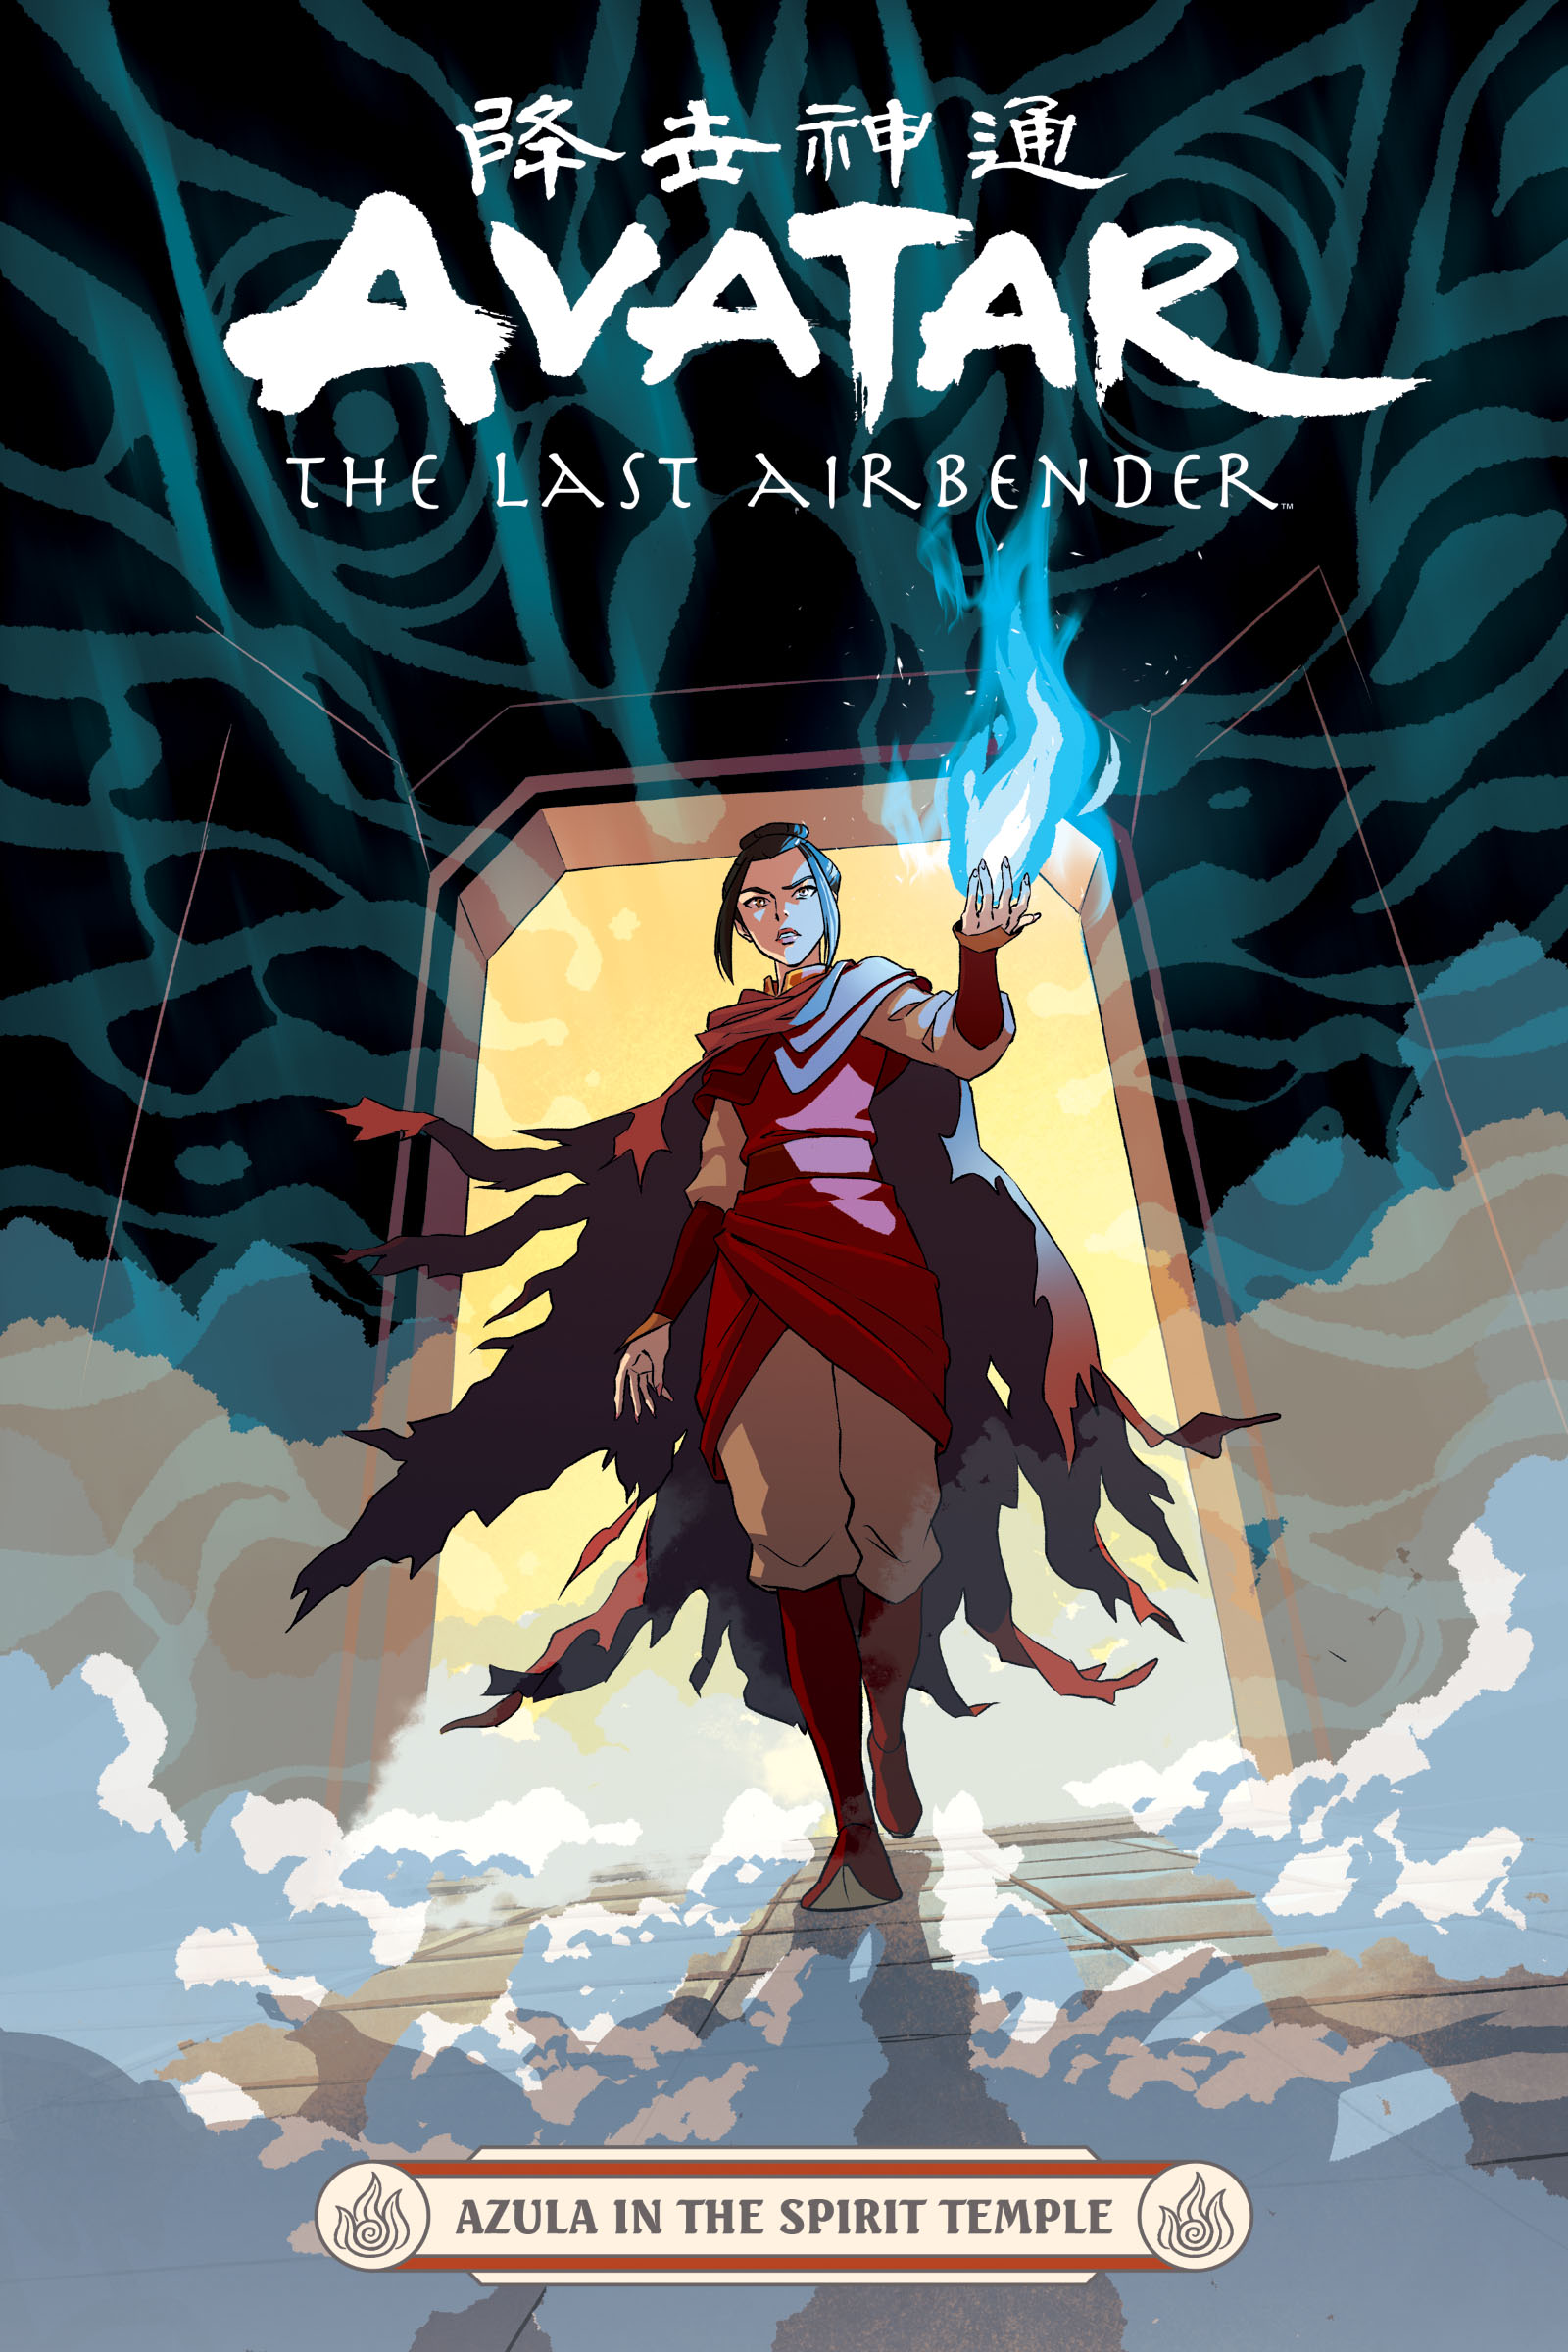 The Best Avatar The Last Airbender Episodes